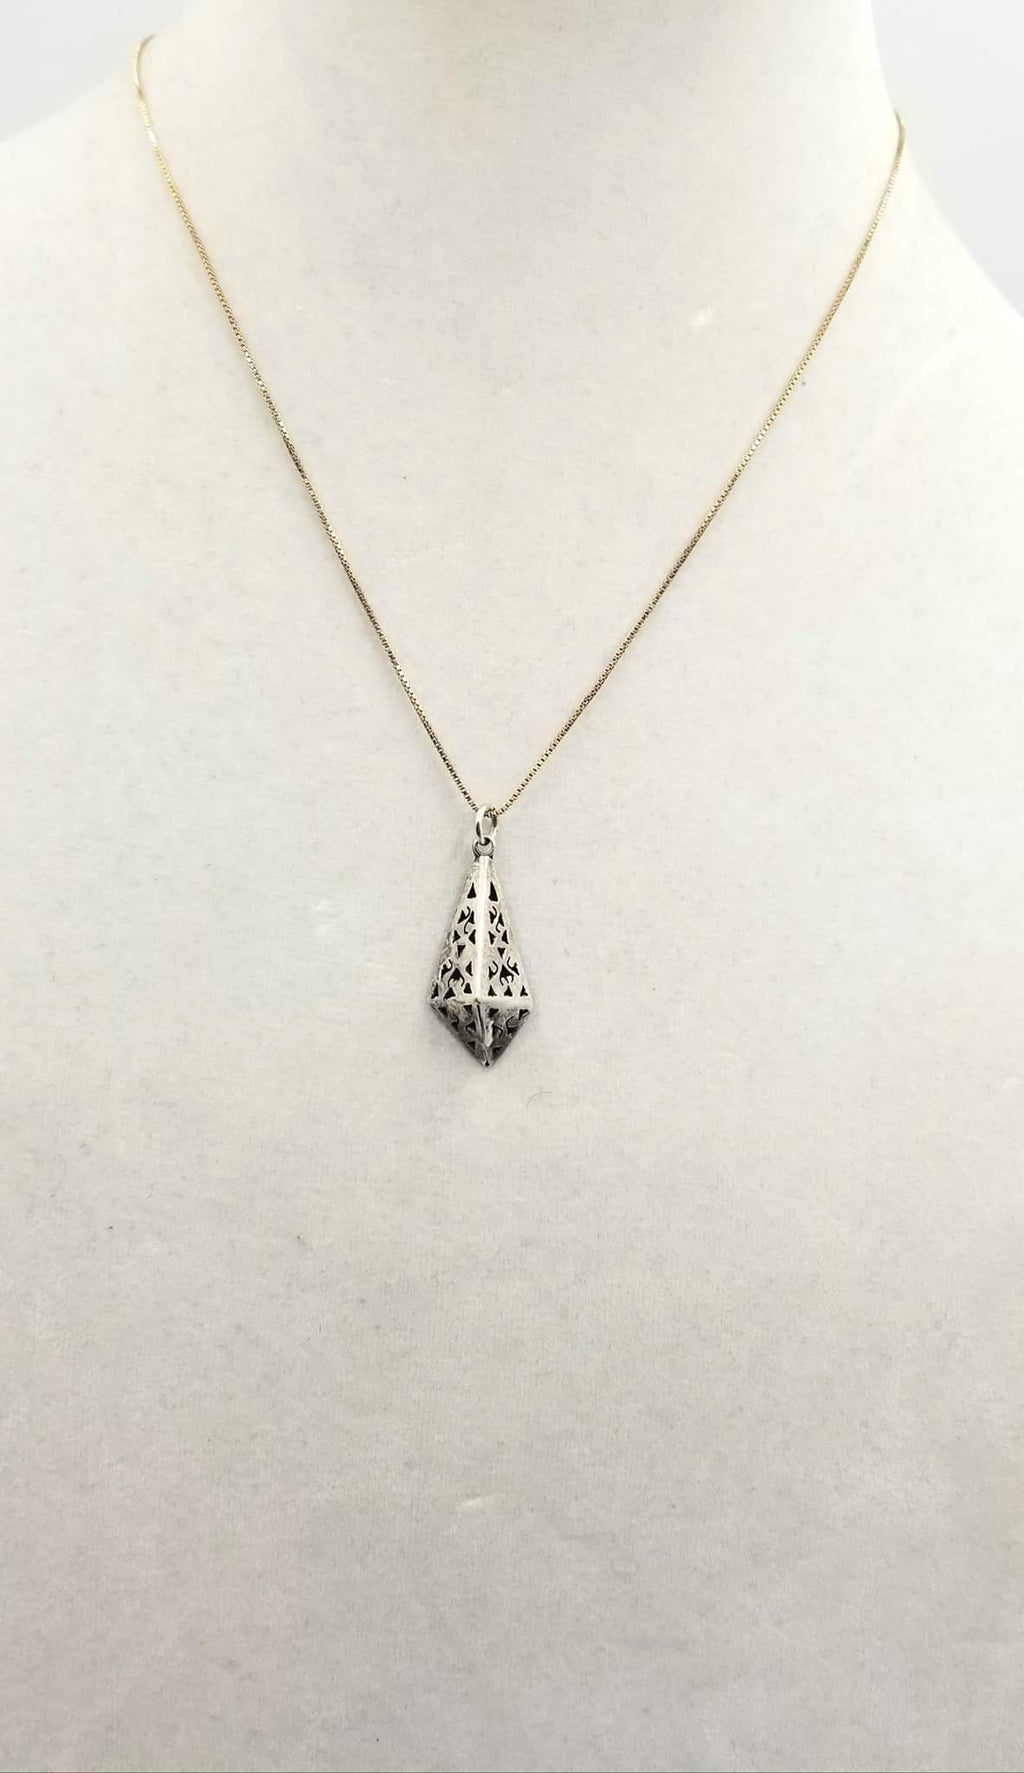 Vermeil, bold geometric sterling silver pendant necklace. 18" Length. Vegan.